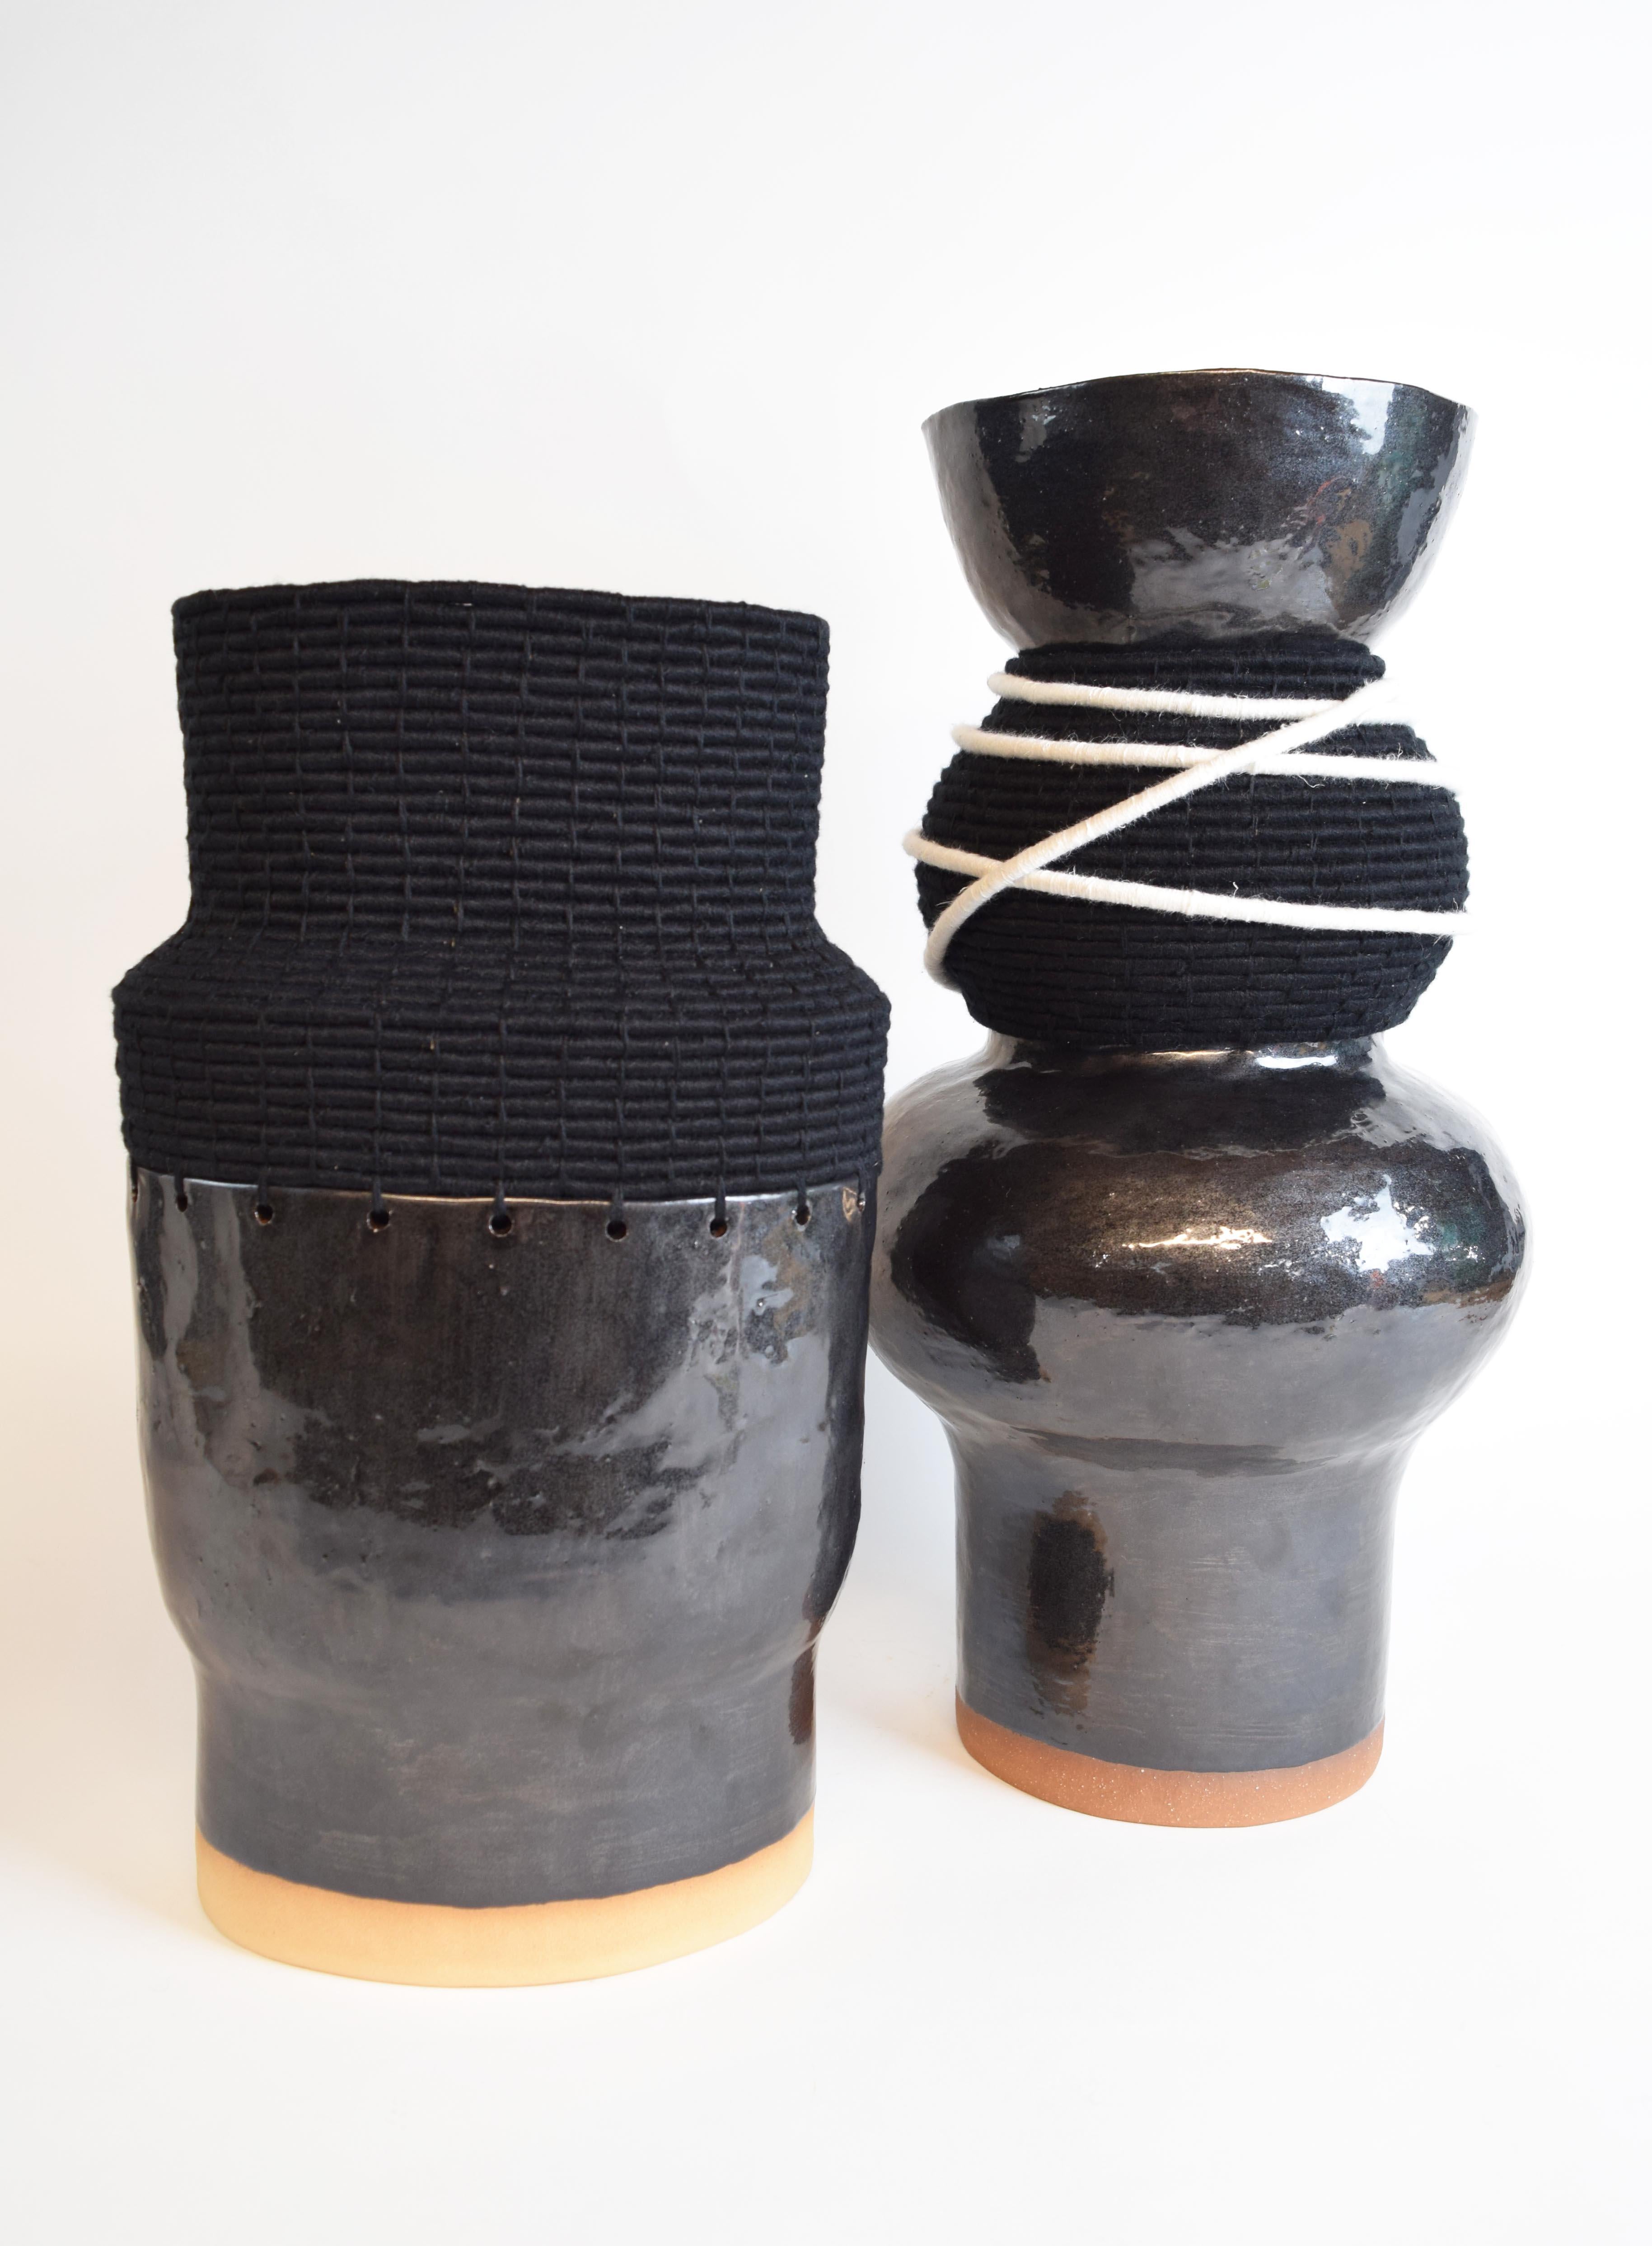 Contemporary One of a Kind Handmade Ceramic Vessel #783, Black Glaze, Woven Black Cotton